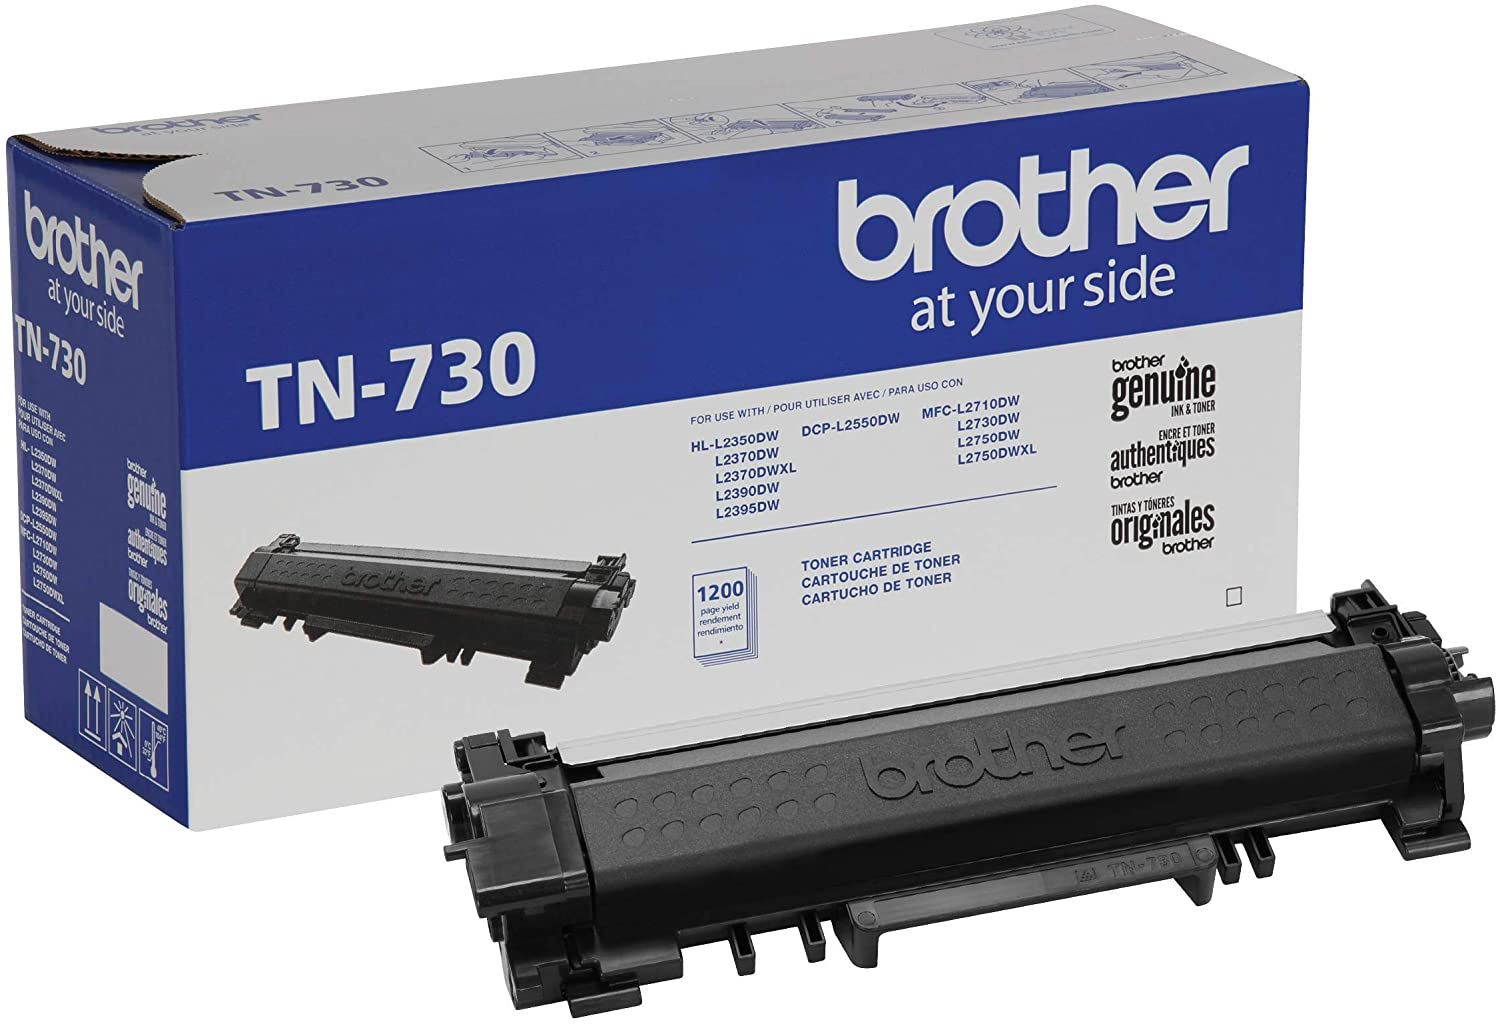 Brother Genuine OEM TN730 Black Toner Cartridge, Estimated Yield 1200